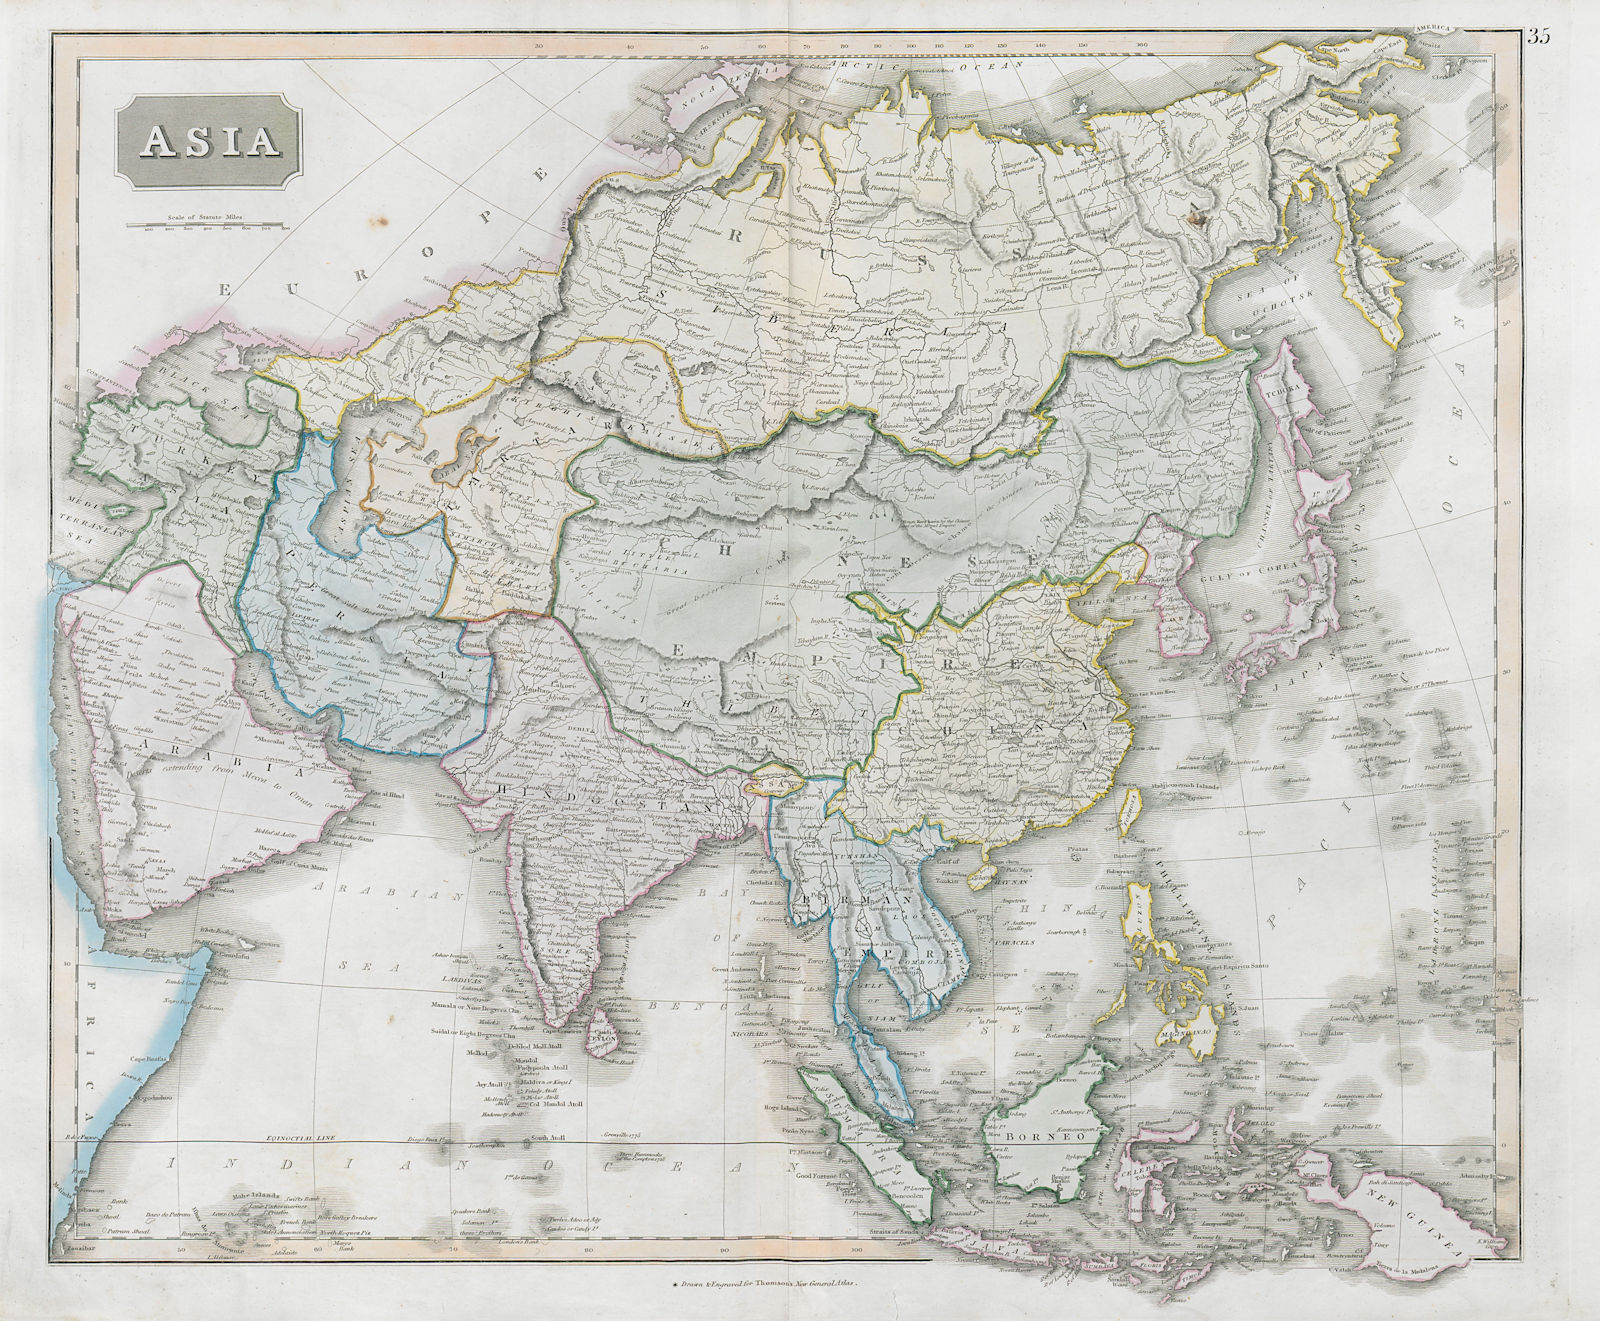 Asia. Arabia. Independent Assam. Birman Empire. East Indies. THOMSON 1830 map